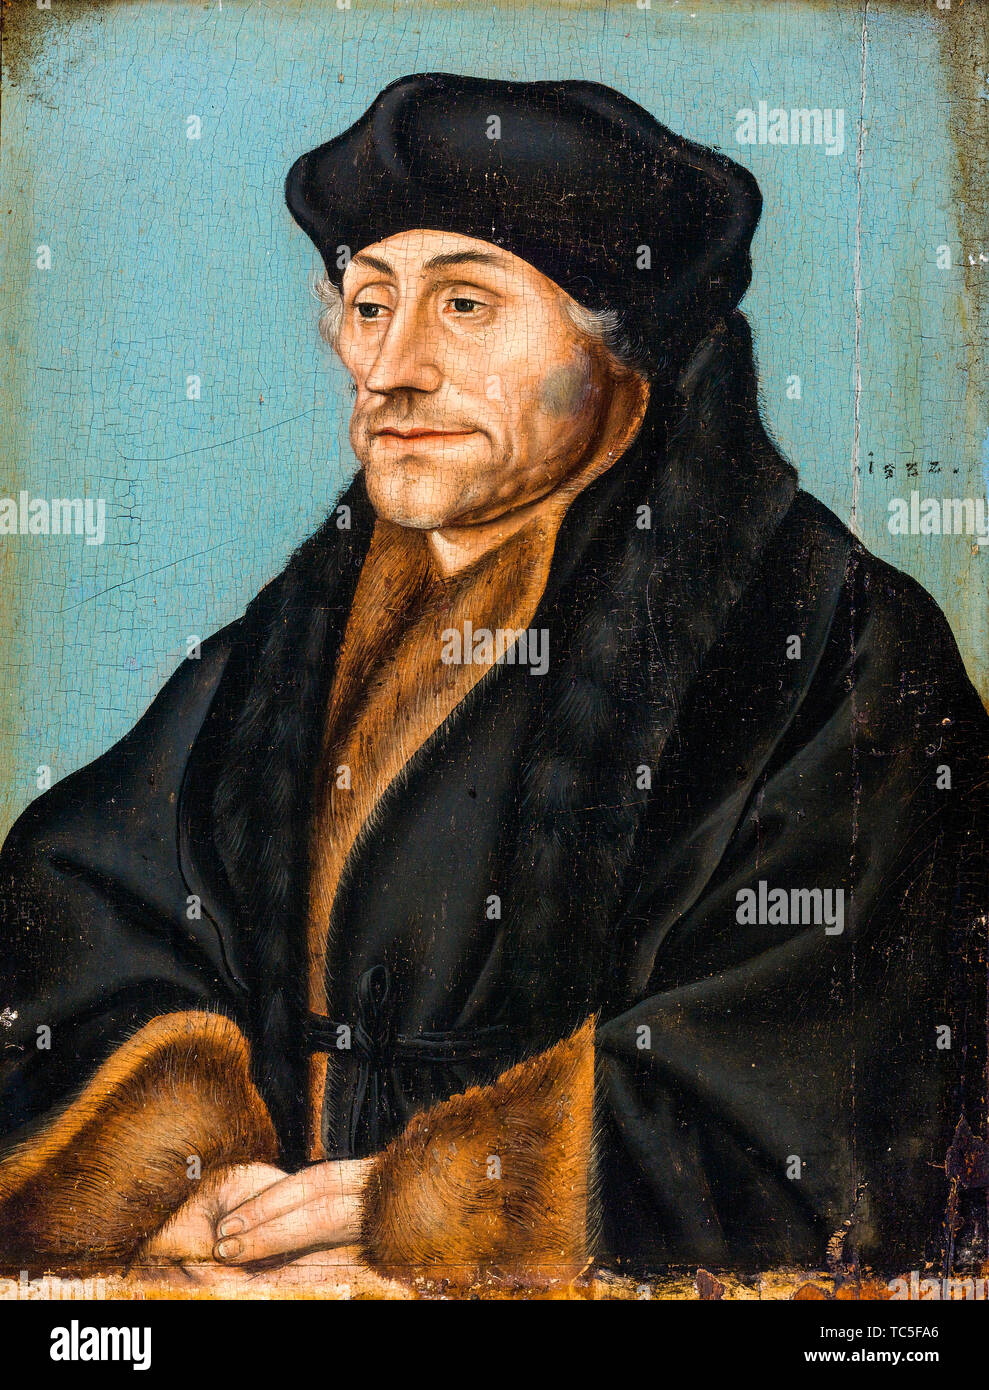 Lucas Cranach the Elder, Erasmus of Rotterdam, 1466-1536, portrait painting, circa 1530 Stock Photo